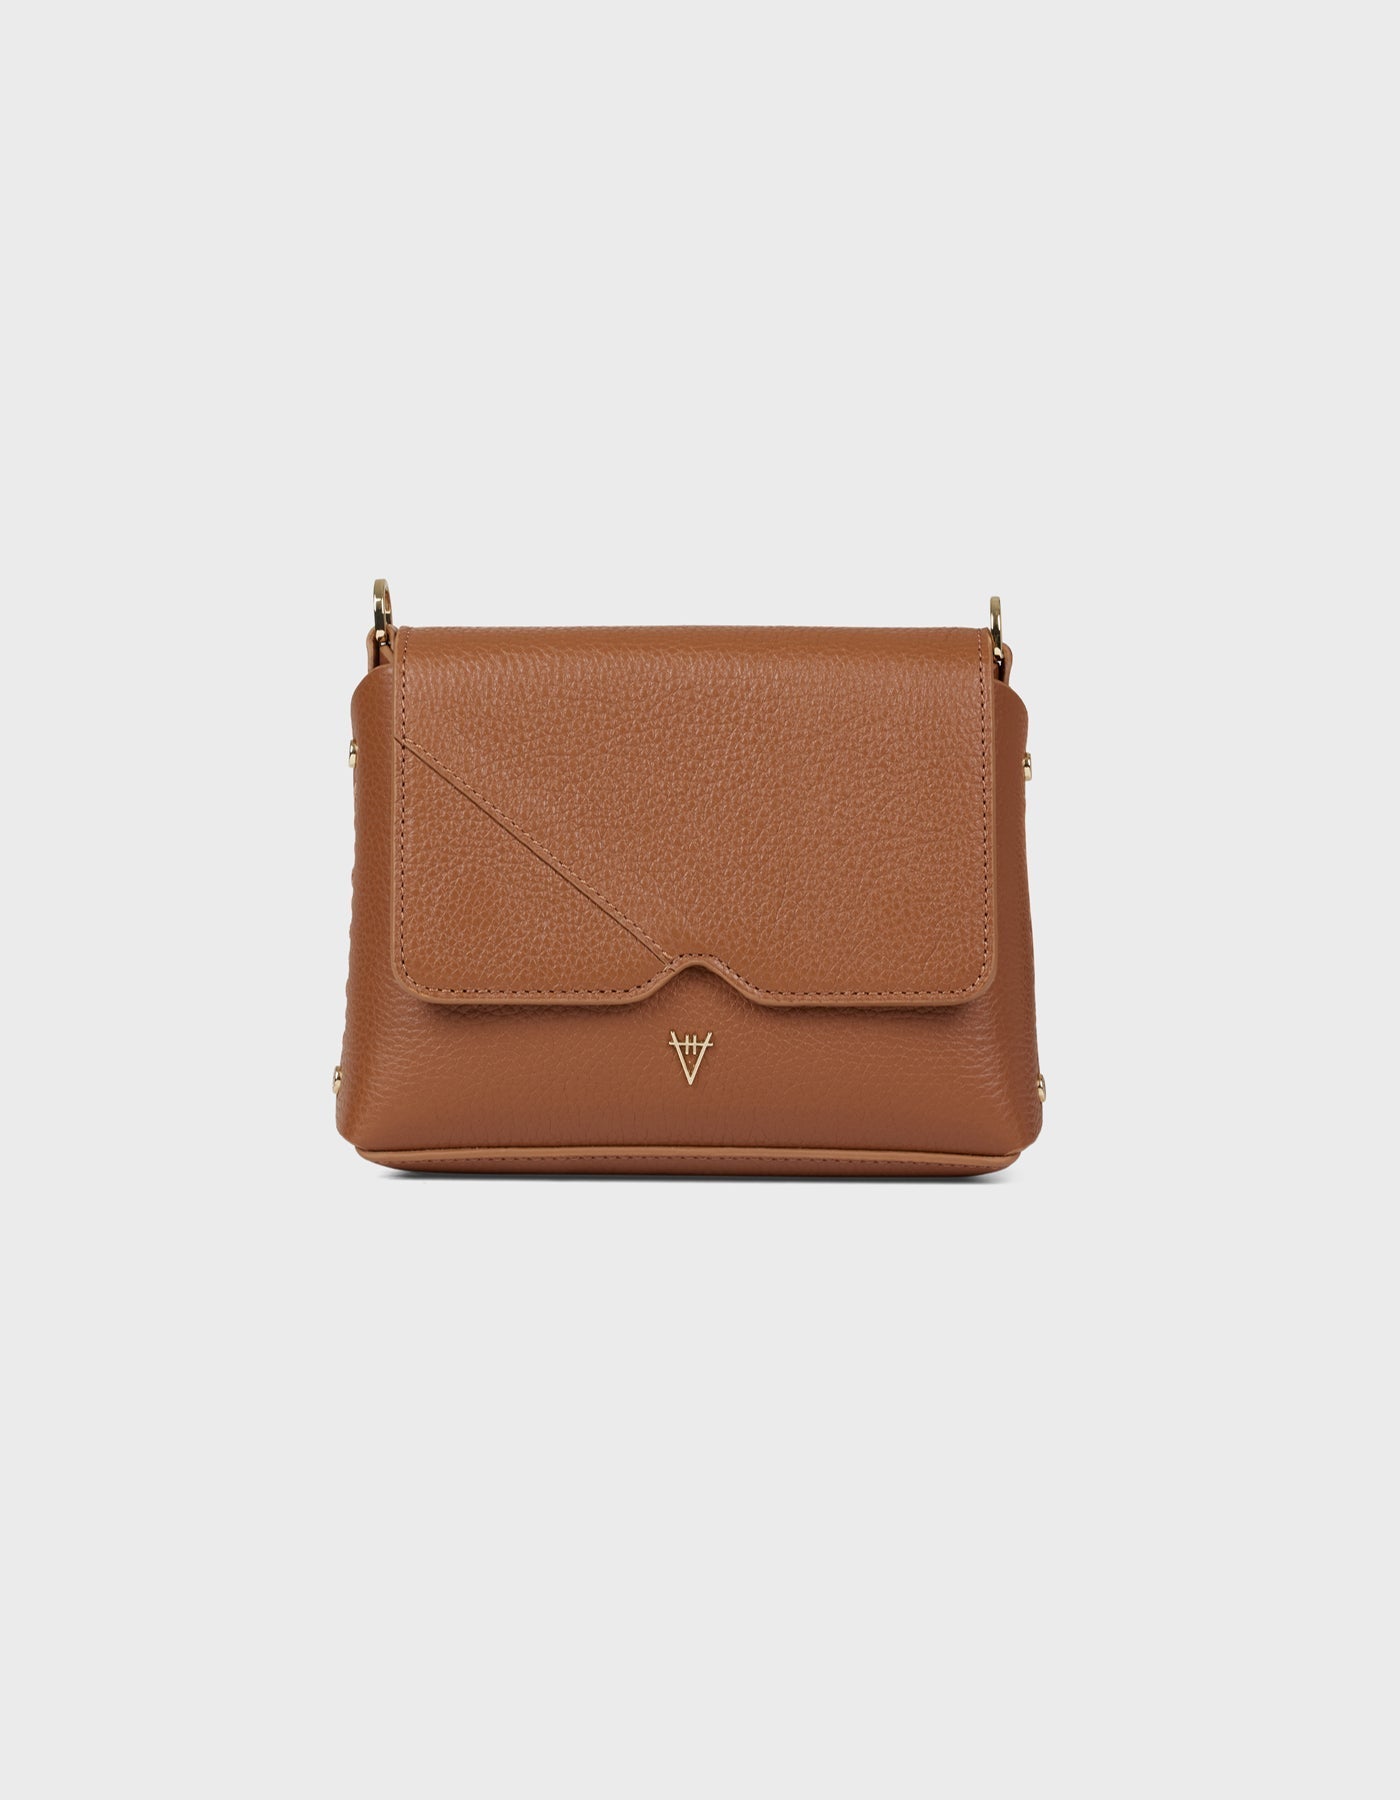 HiVa Atelier | Mini Mare Shoulder Bag Wood | Beautiful and Versatile Leather Accessories